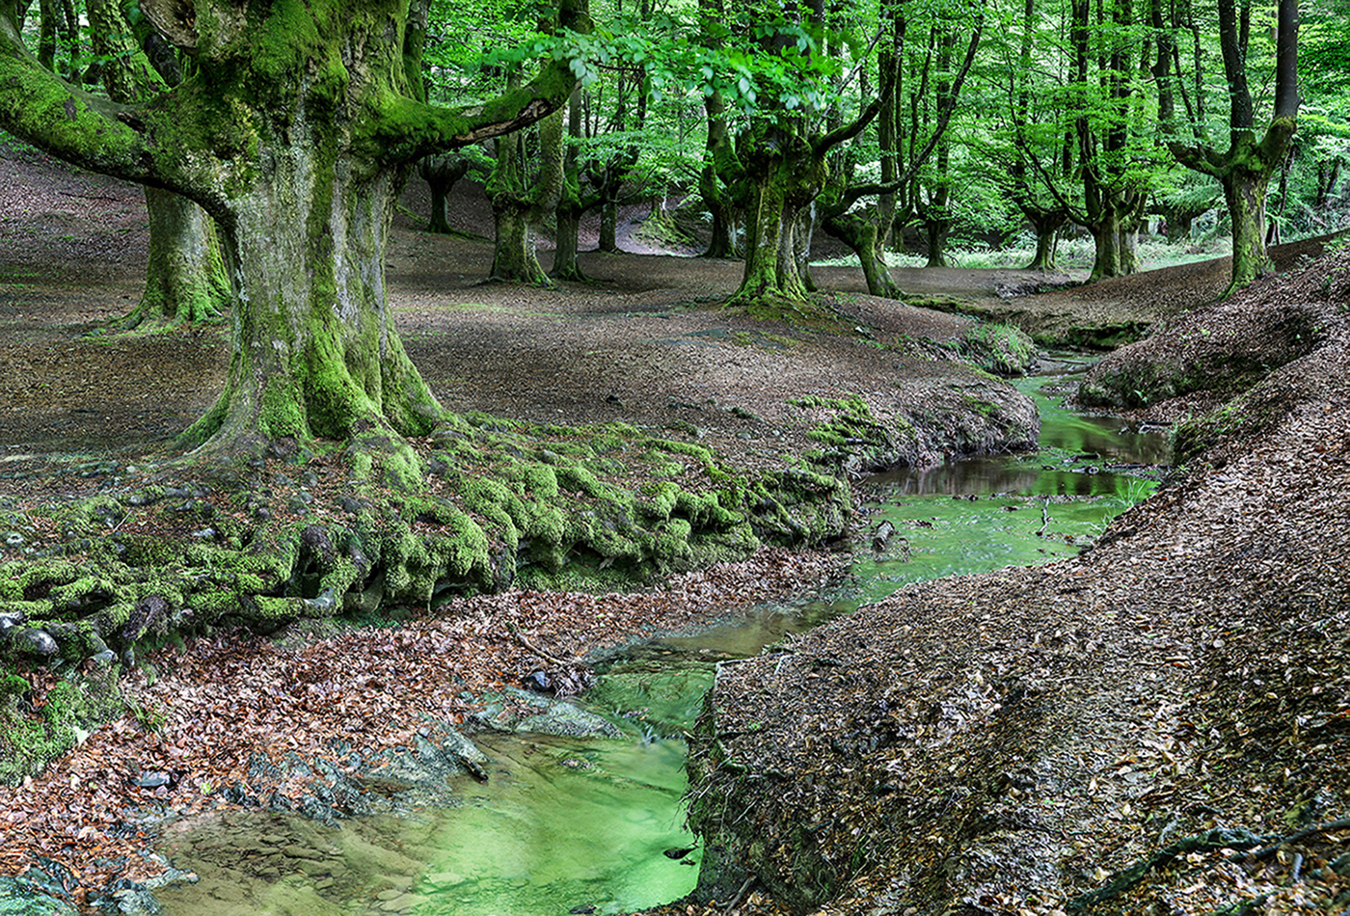 The green Creek | © Sonja Molter